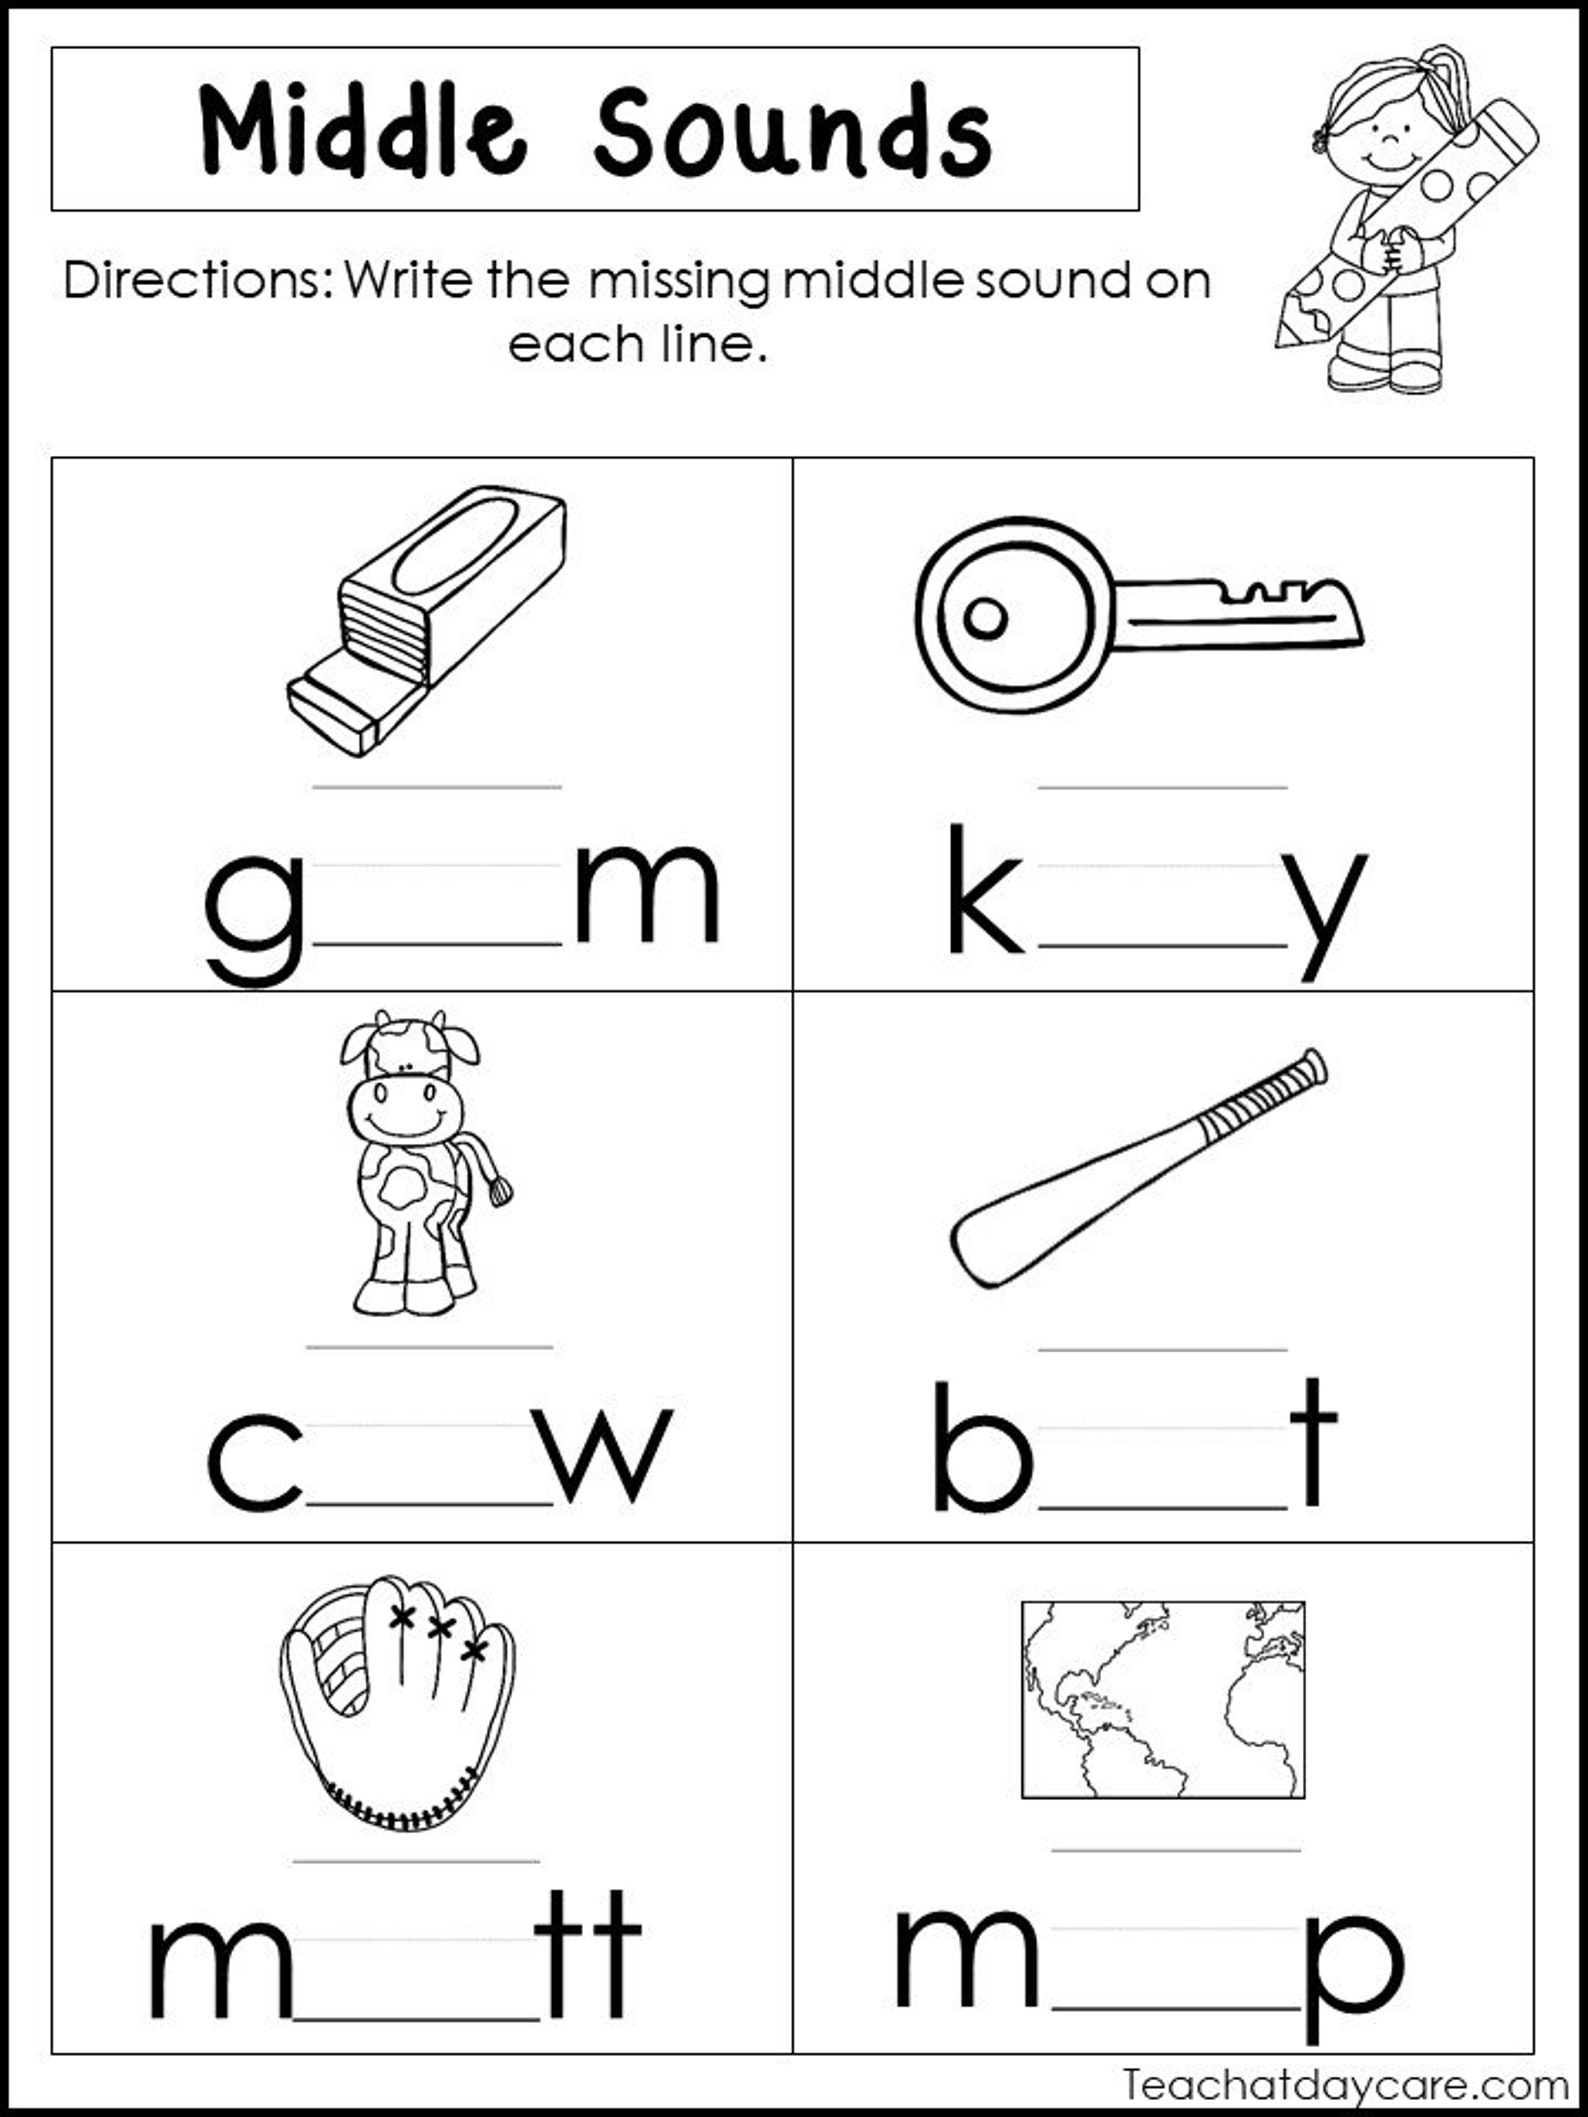 10 Printable Middle Sounds Worksheets. Preschool-1st Grade | Etsy